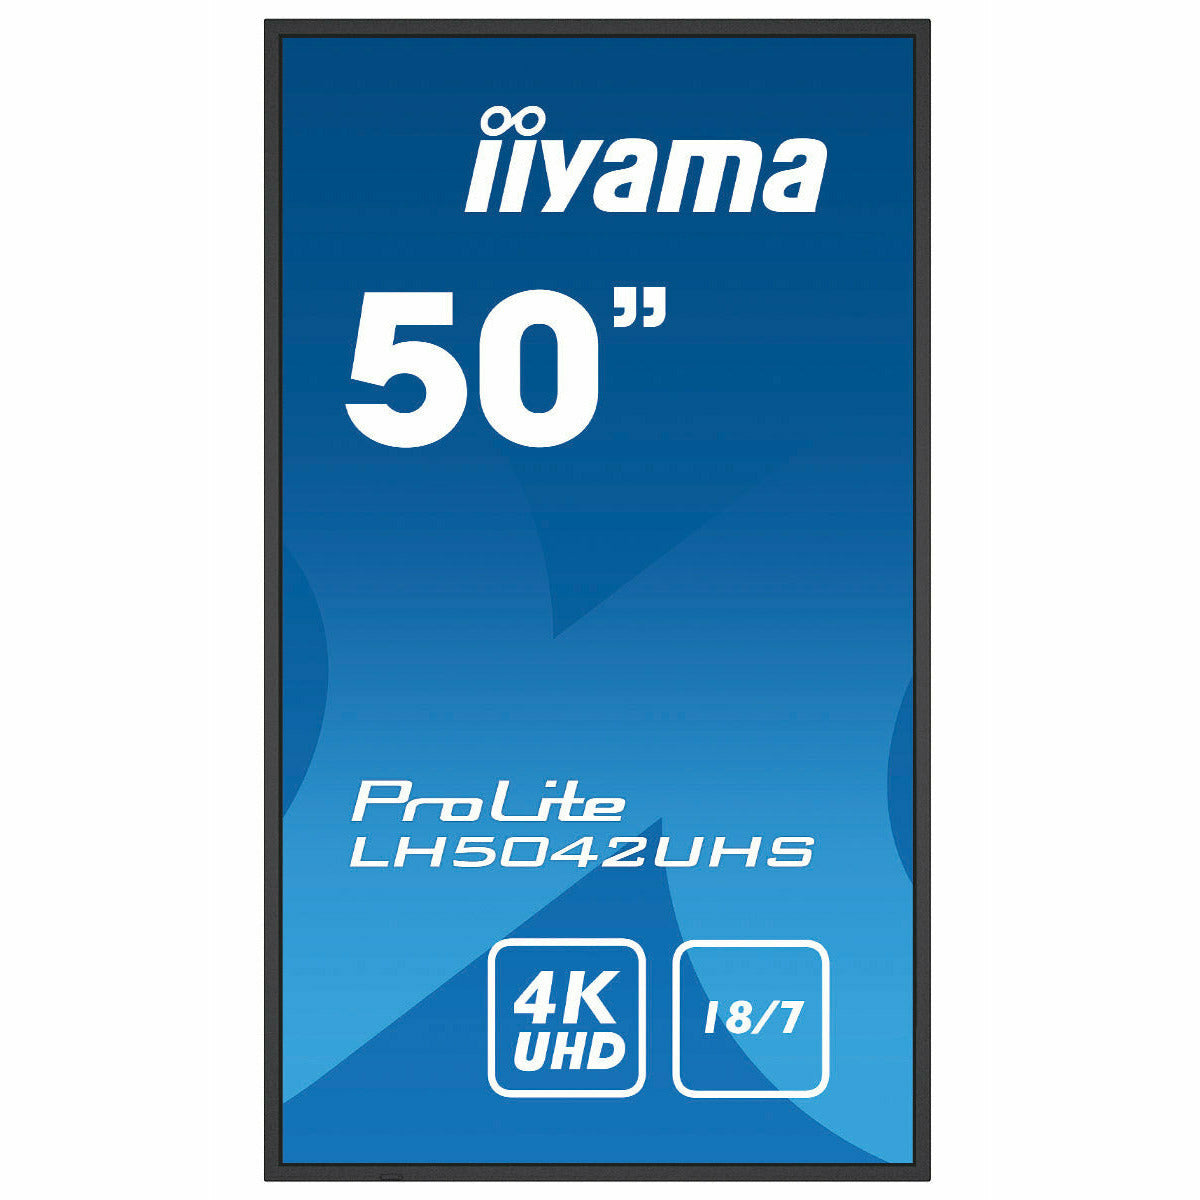 Dark Cyan iiyama ProLite LH5042UHS-B3 50" 18/7 with Android 8.0 and iiyama N-sign integrated Signage Platform